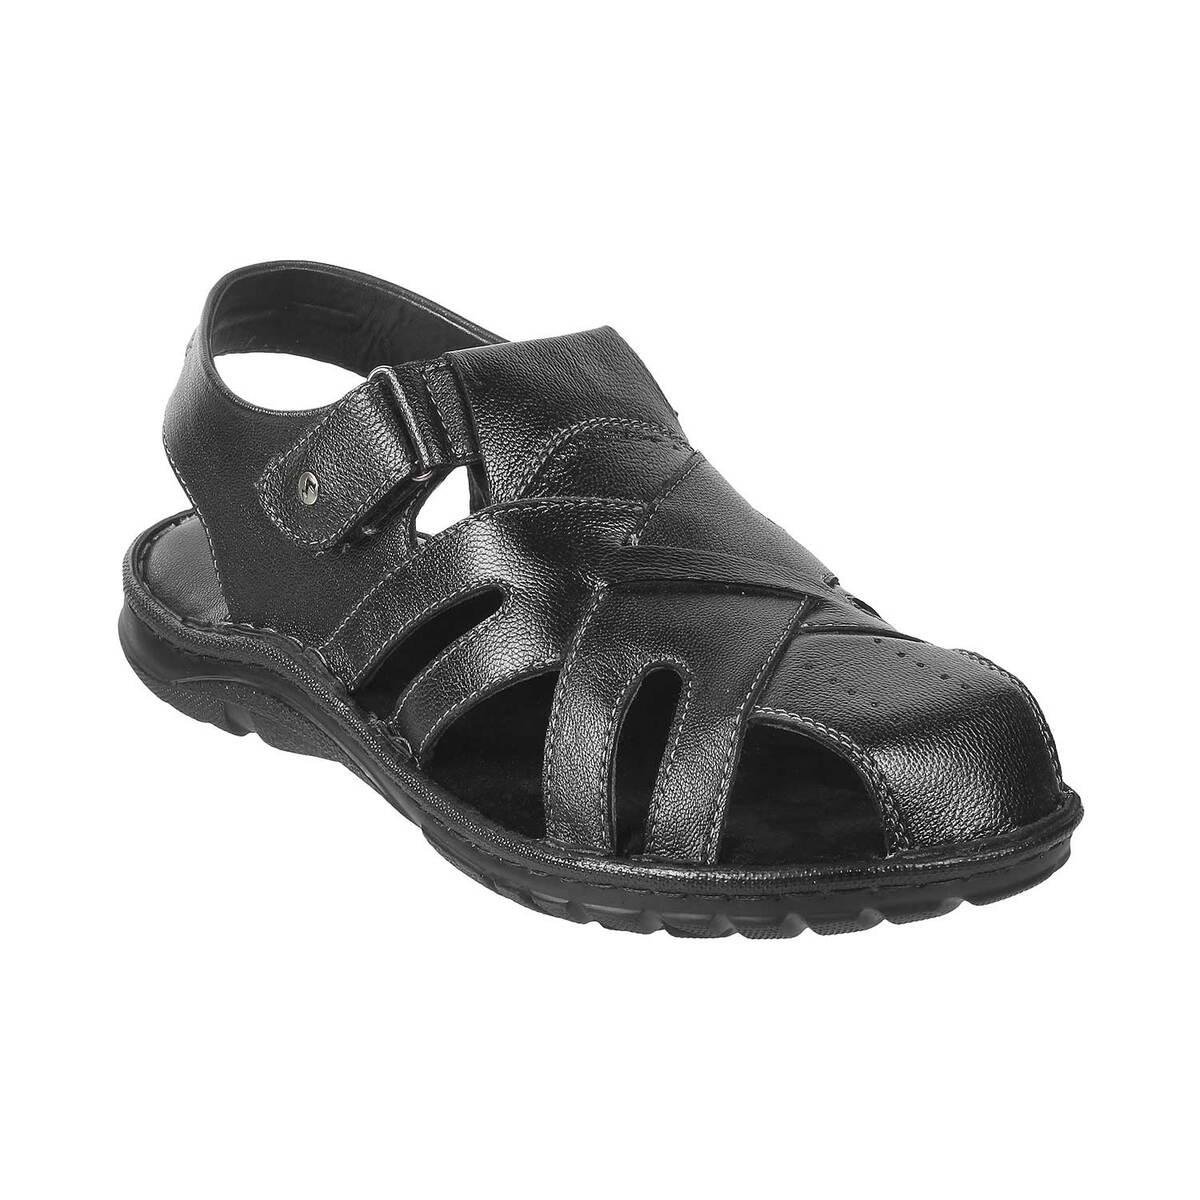 Buy Men Olive Solid Sandals Online - 604902 | Louis Philippe-sgquangbinhtourist.com.vn